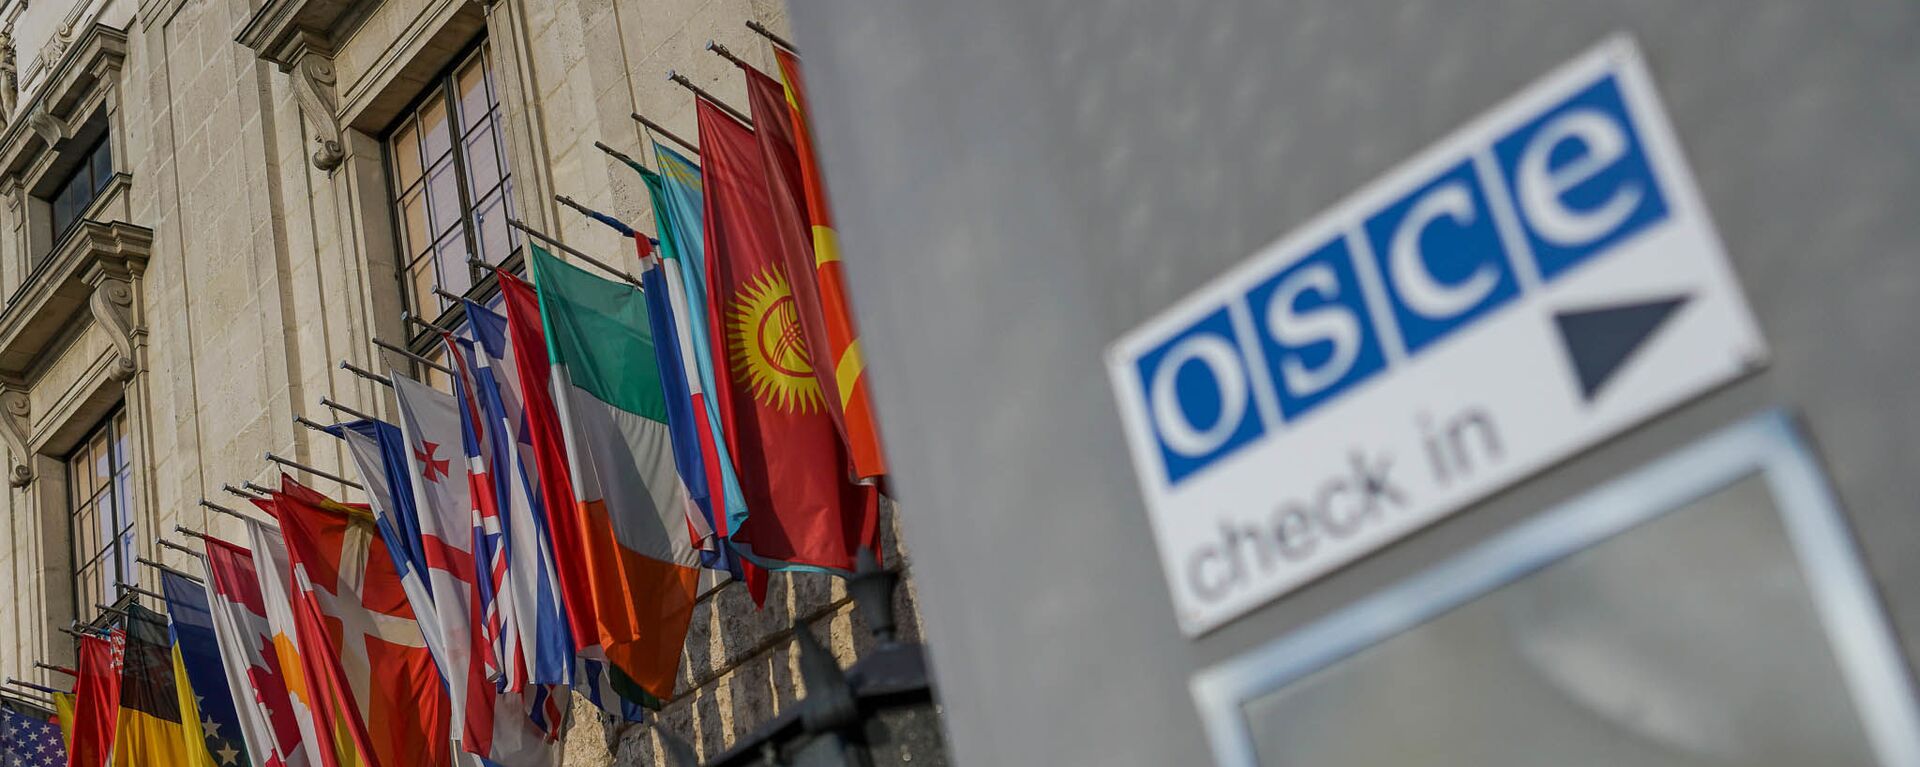 Флаги у штаб-квартиры ОБСЕ в Вене - Sputnik Латвия, 1920, 27.04.2021